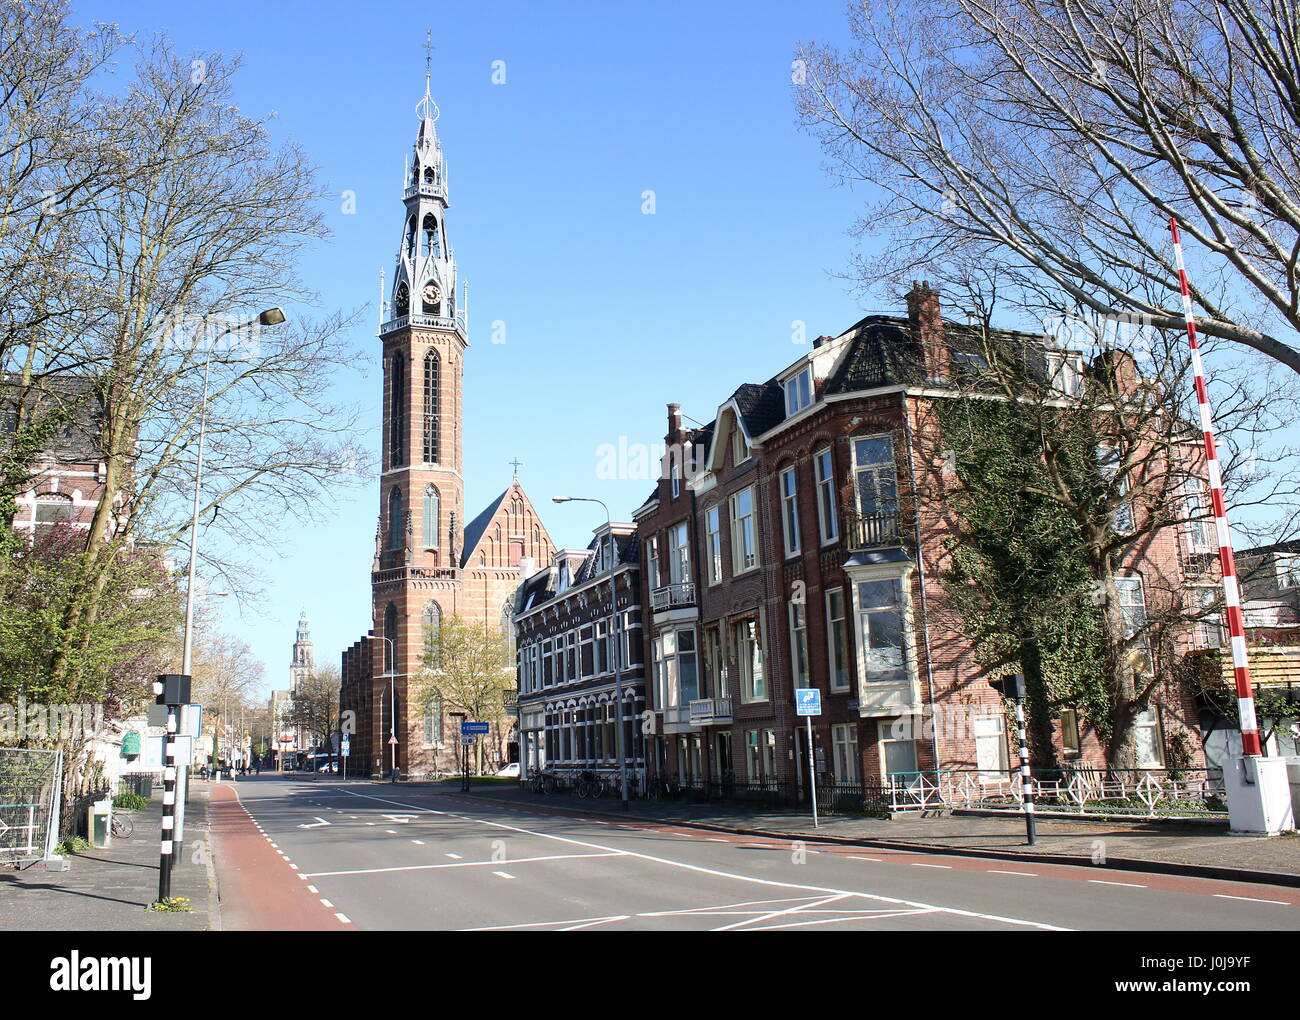 Cattedrale di San Giuseppe (Sint Jozef kathedraal), Cattedrale della diocesi Cattolica Romana di Groningen / Leeuwarden a Groningen, Paesi Bassi. Foto Stock